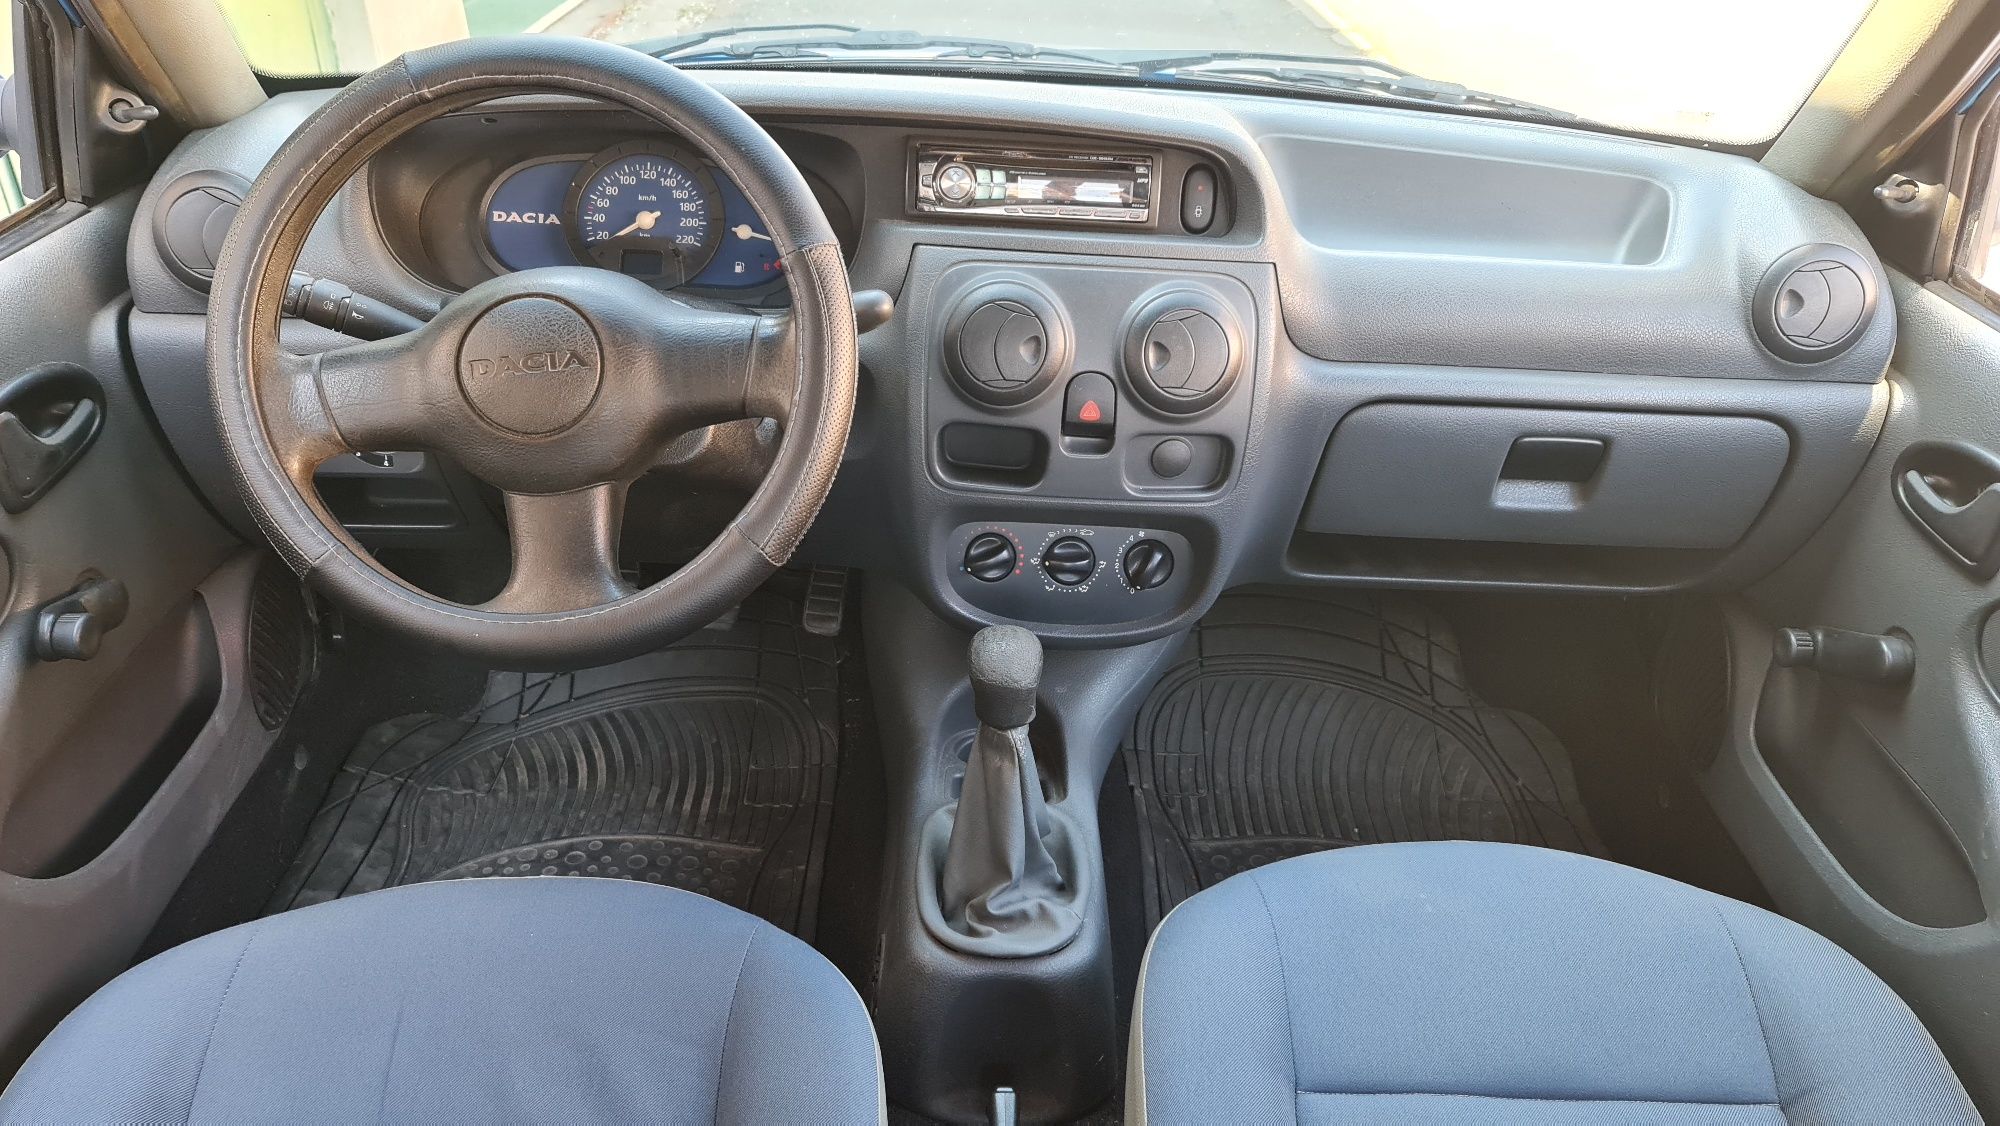 Dacia solenzza 2005.Rulaj 110.000 km